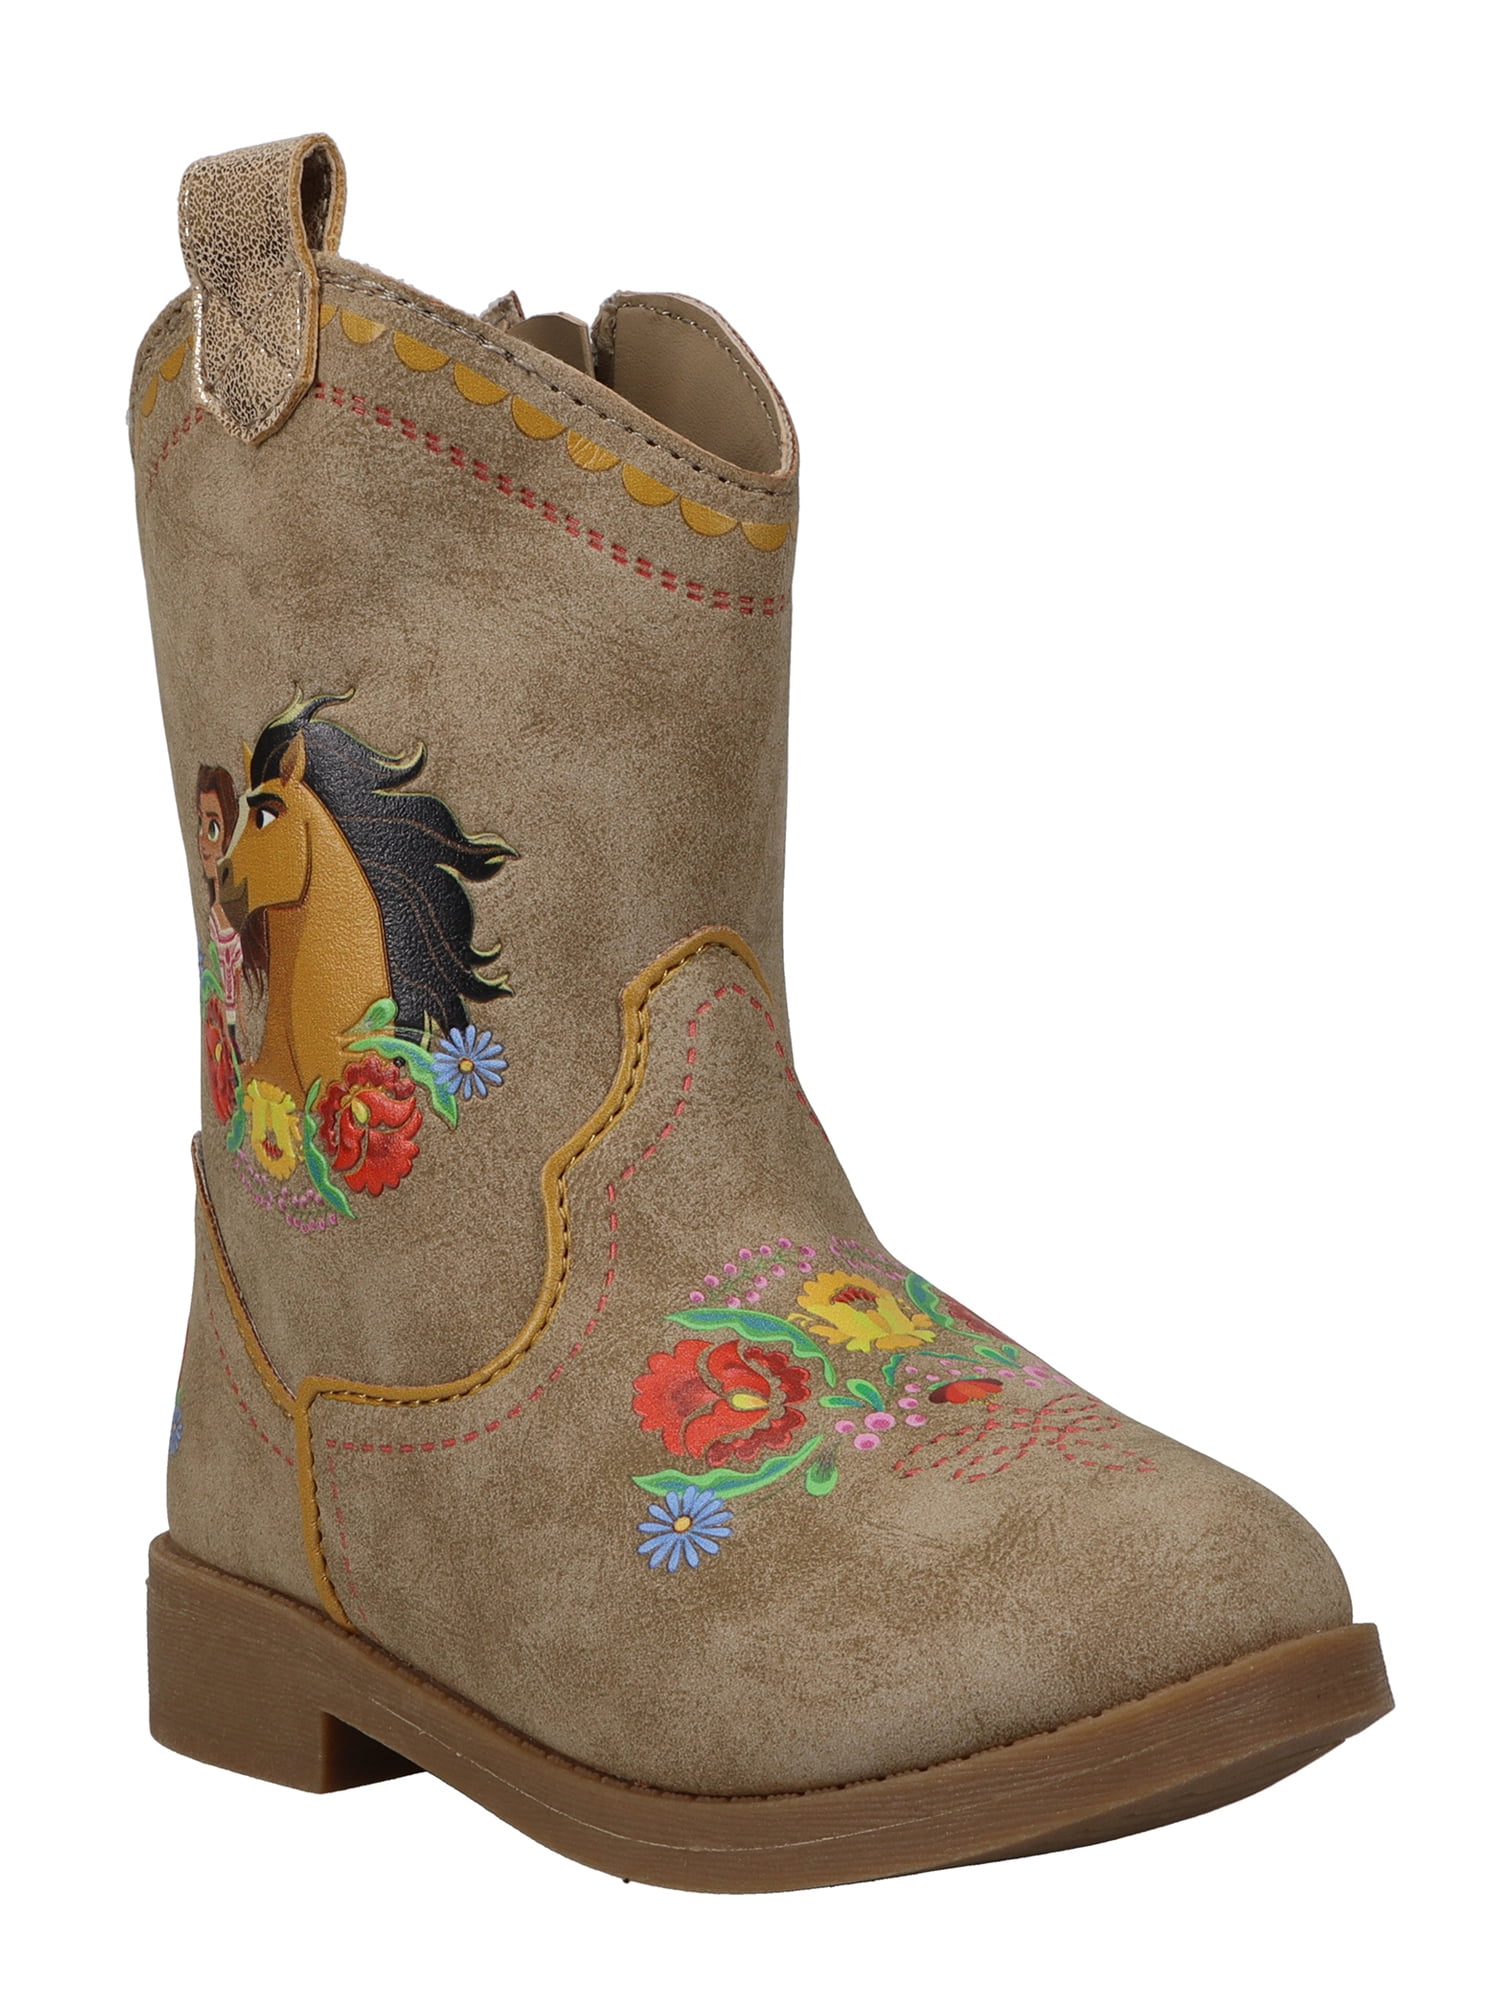 DreamWorks Spirit Toddler Girl Casual Western Cowboy Boot, Sizes 7-12